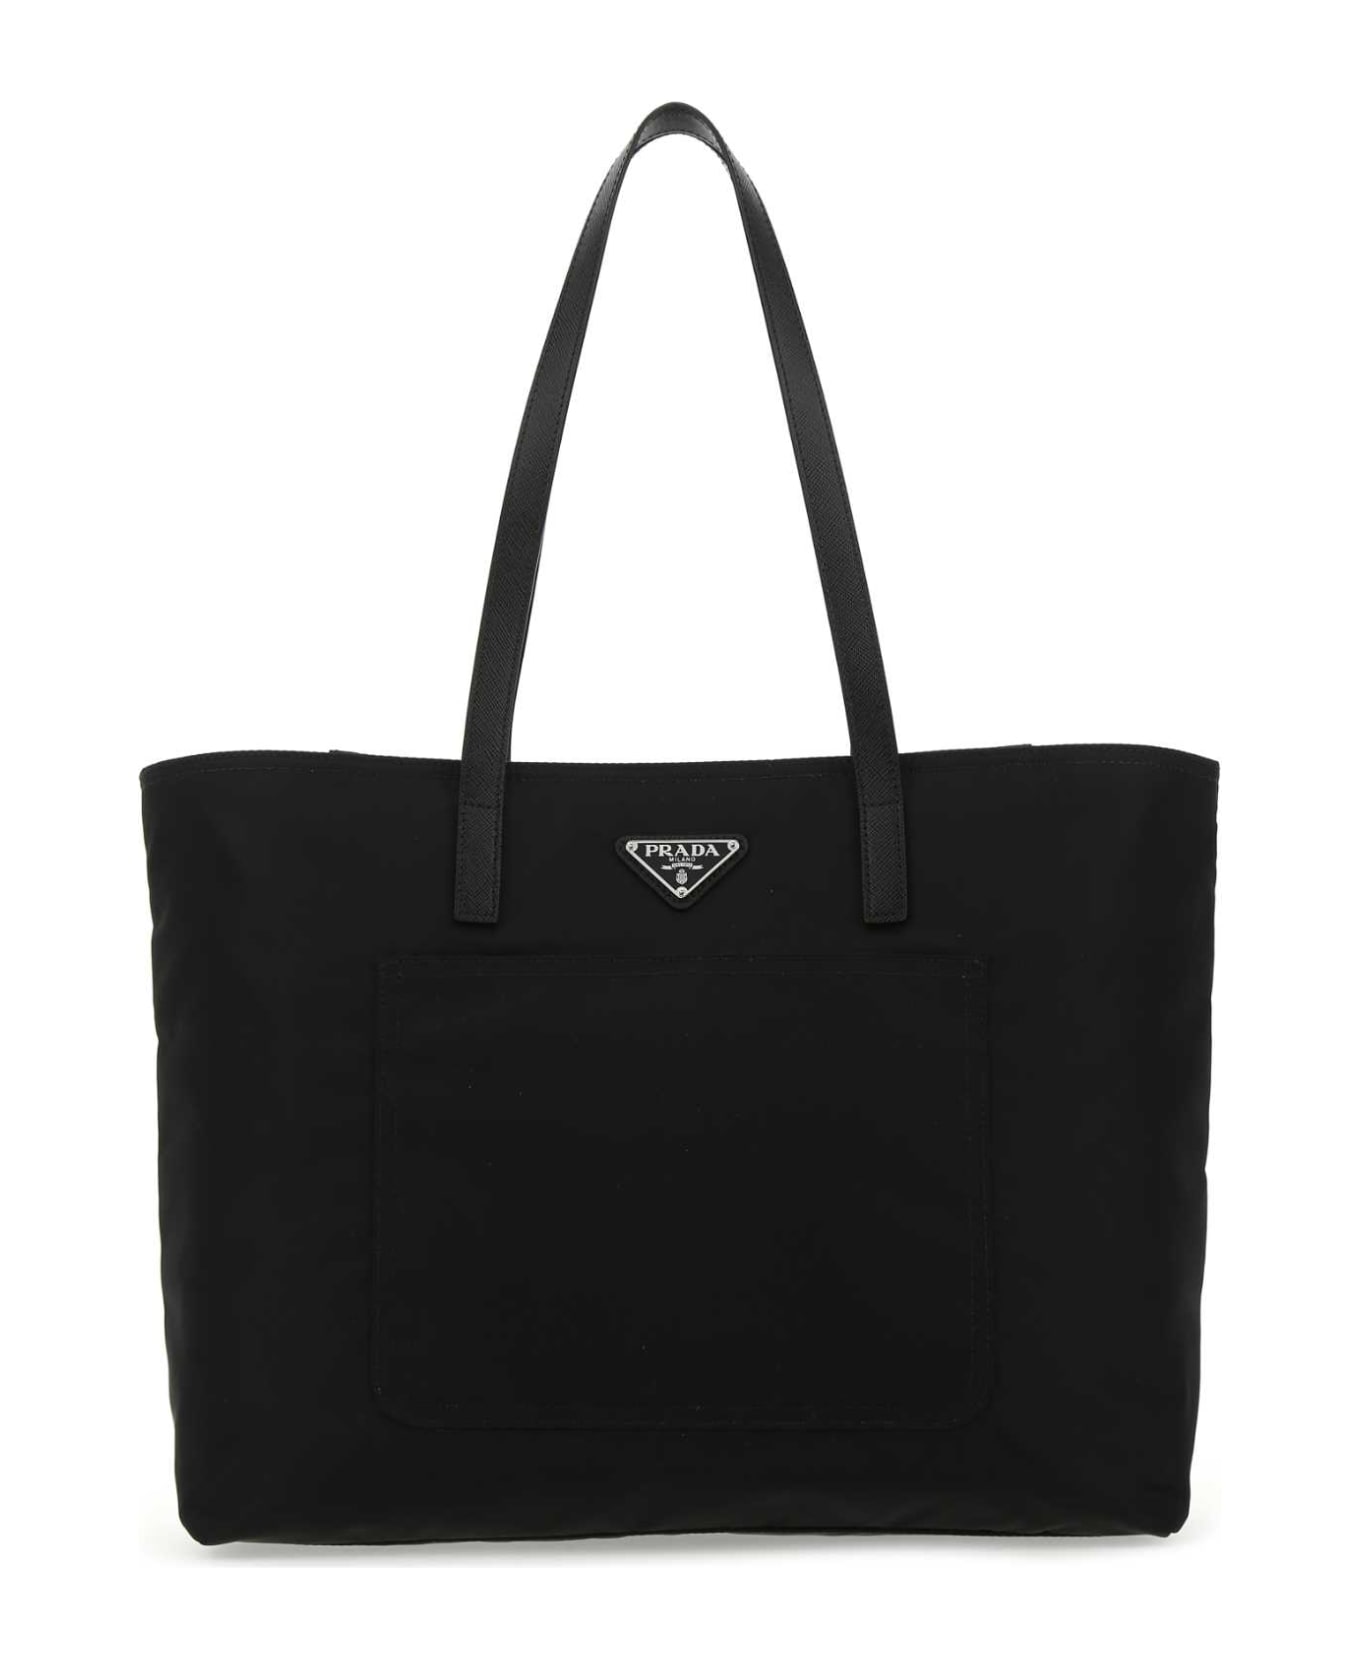 Prada Black Nylon Shopping Bag - F0002 トートバッグ